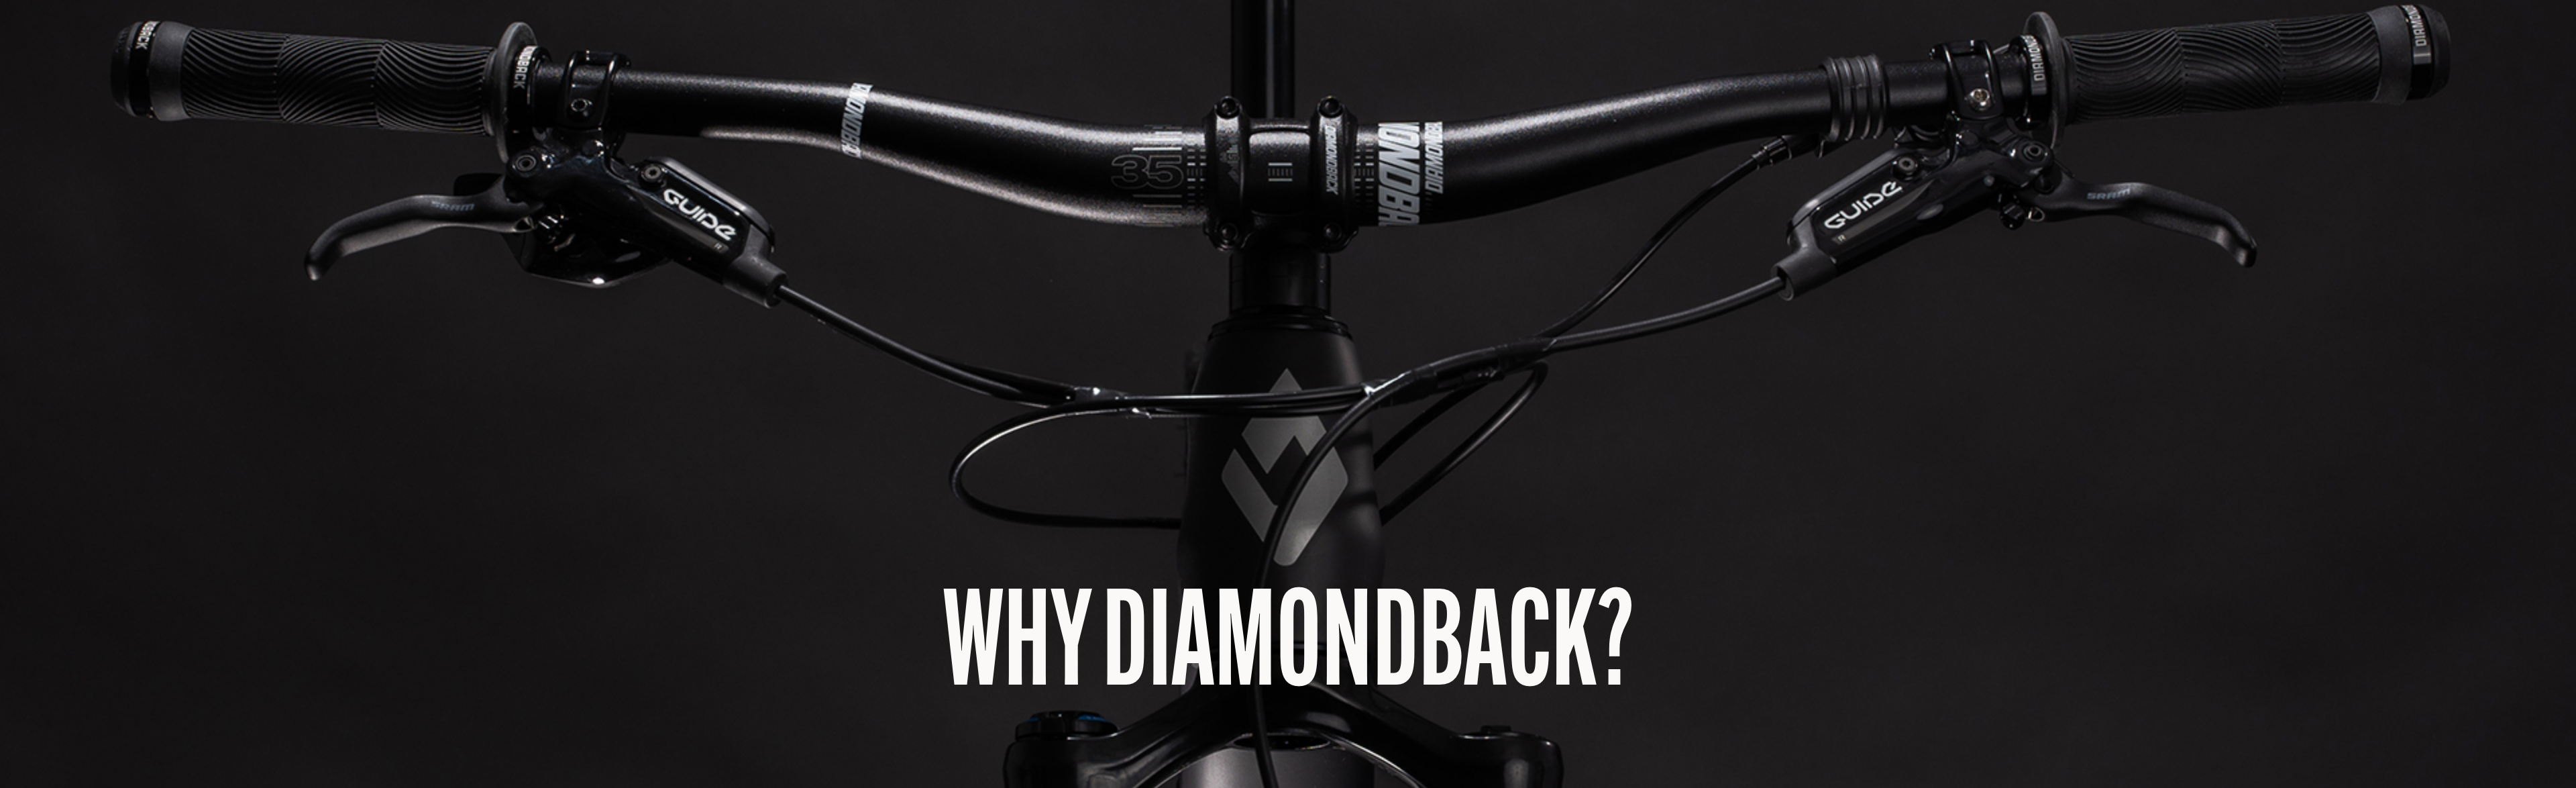 diamondback bike dealers